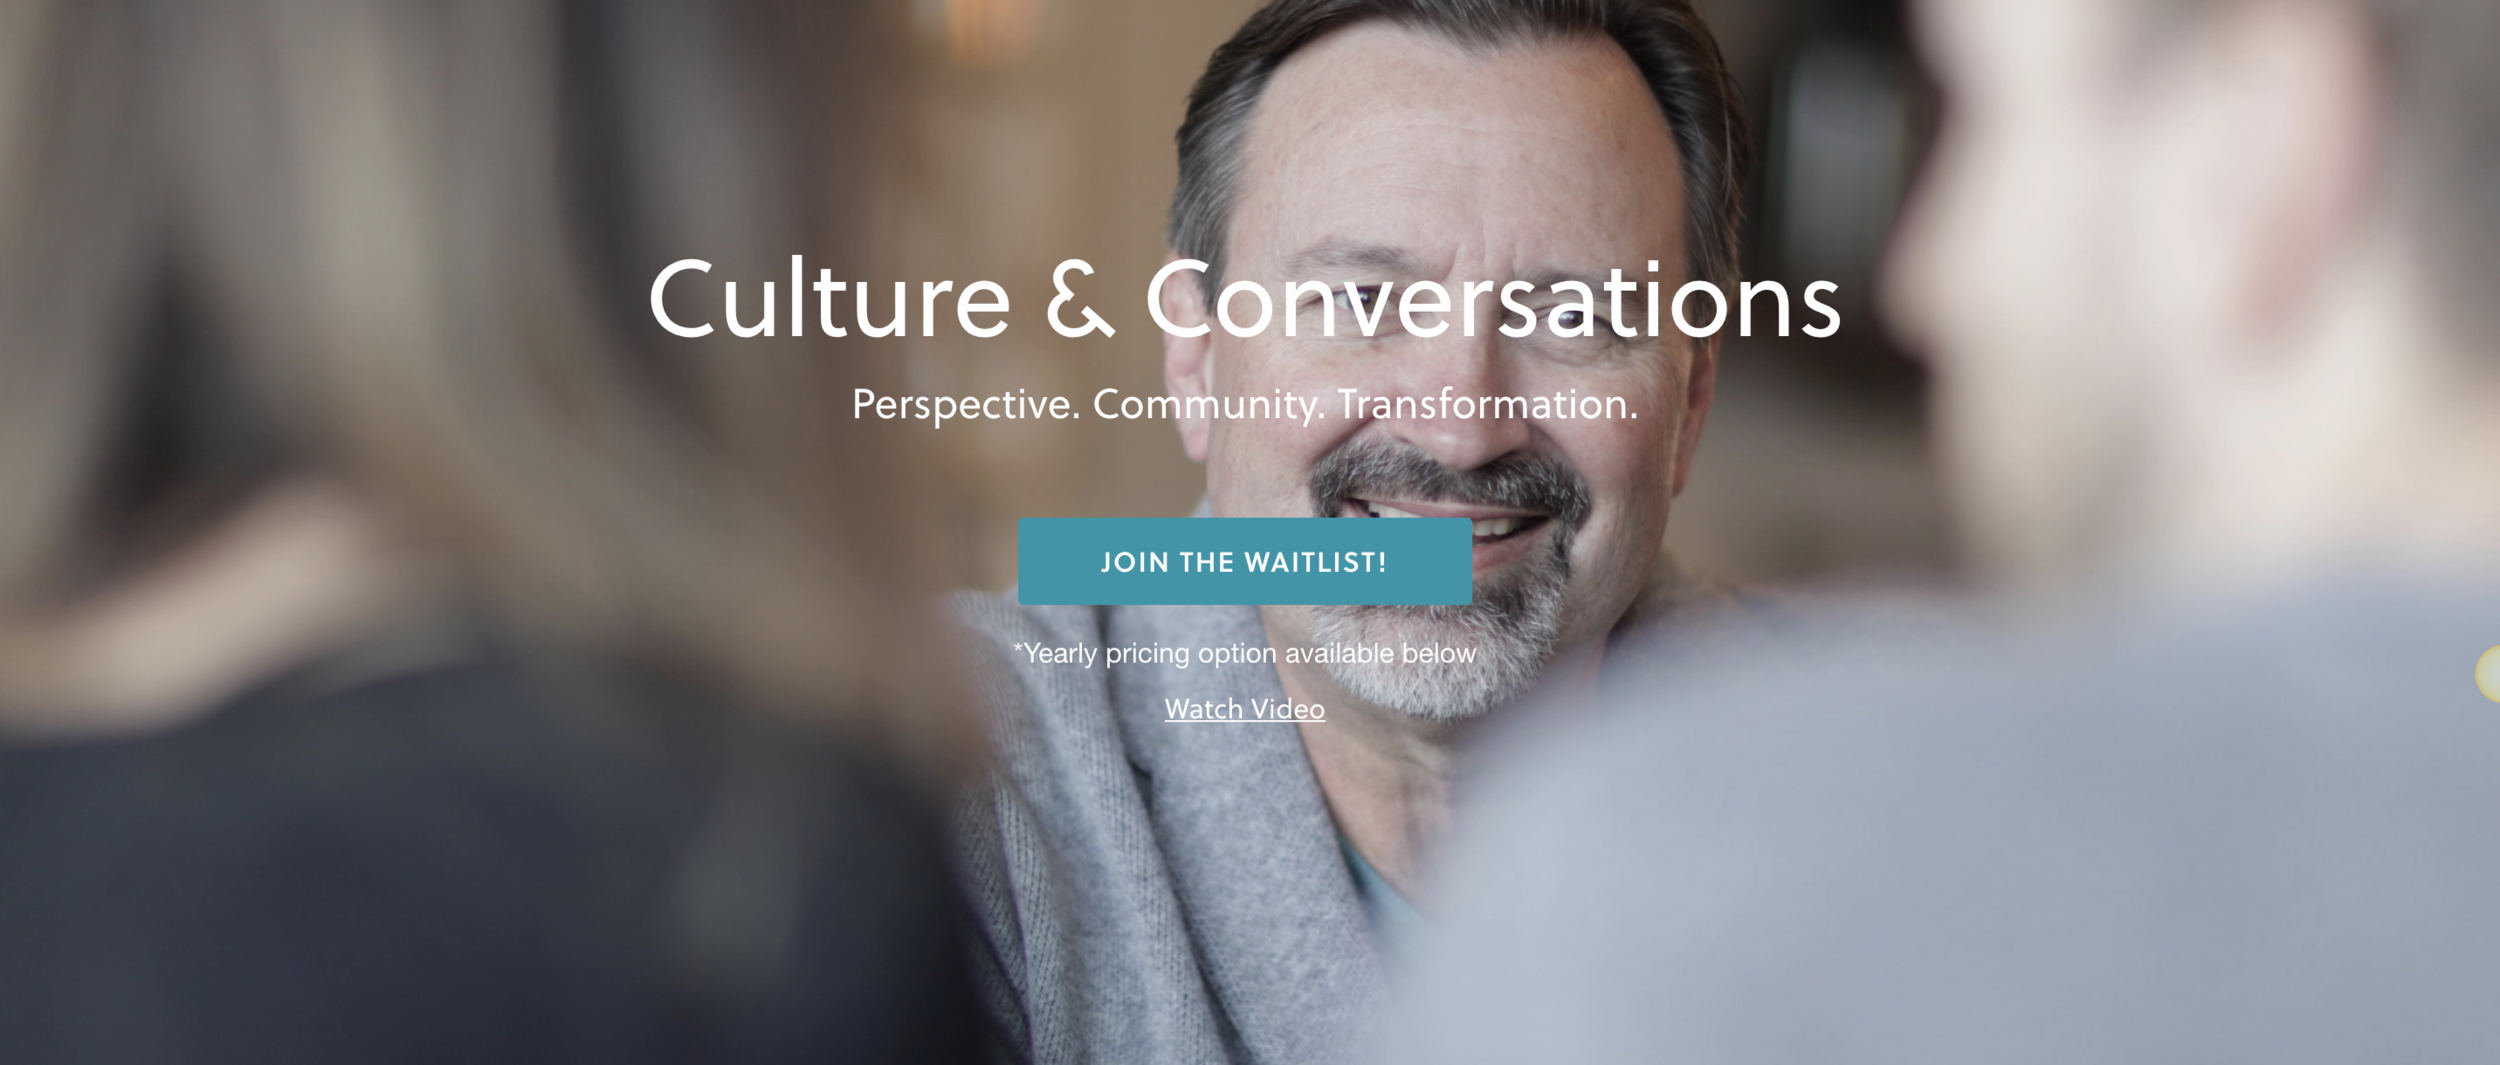 <b>Culture & Conversations</b><br>A Learning Community